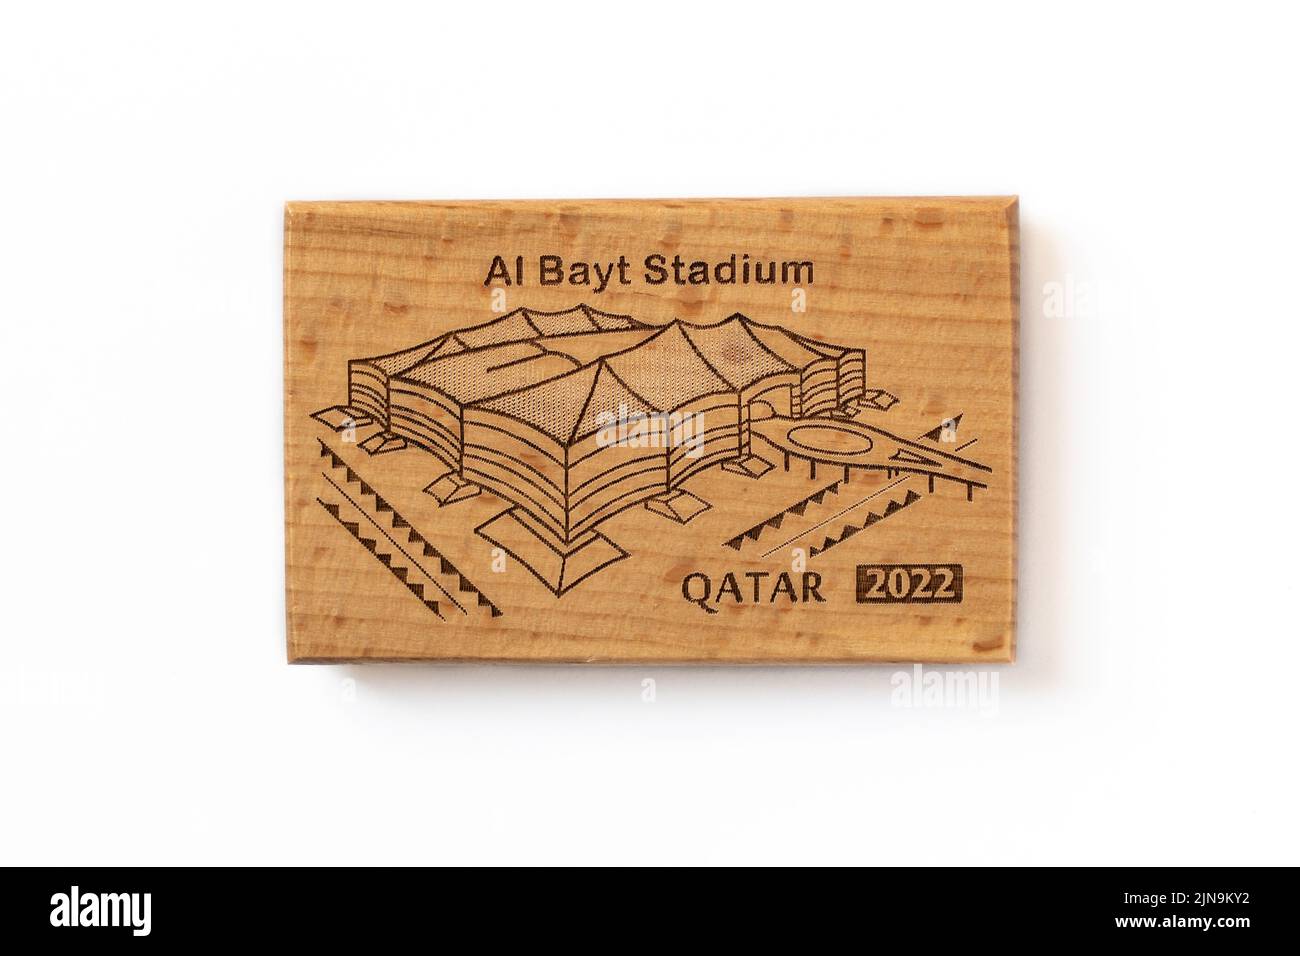 DOHA, QATAR - AUGUST 10, 2022: Al Bayt Stadium Qatar fridge magnet. Qatar will be hosting FIFA World Cup 2022. Stock Photo